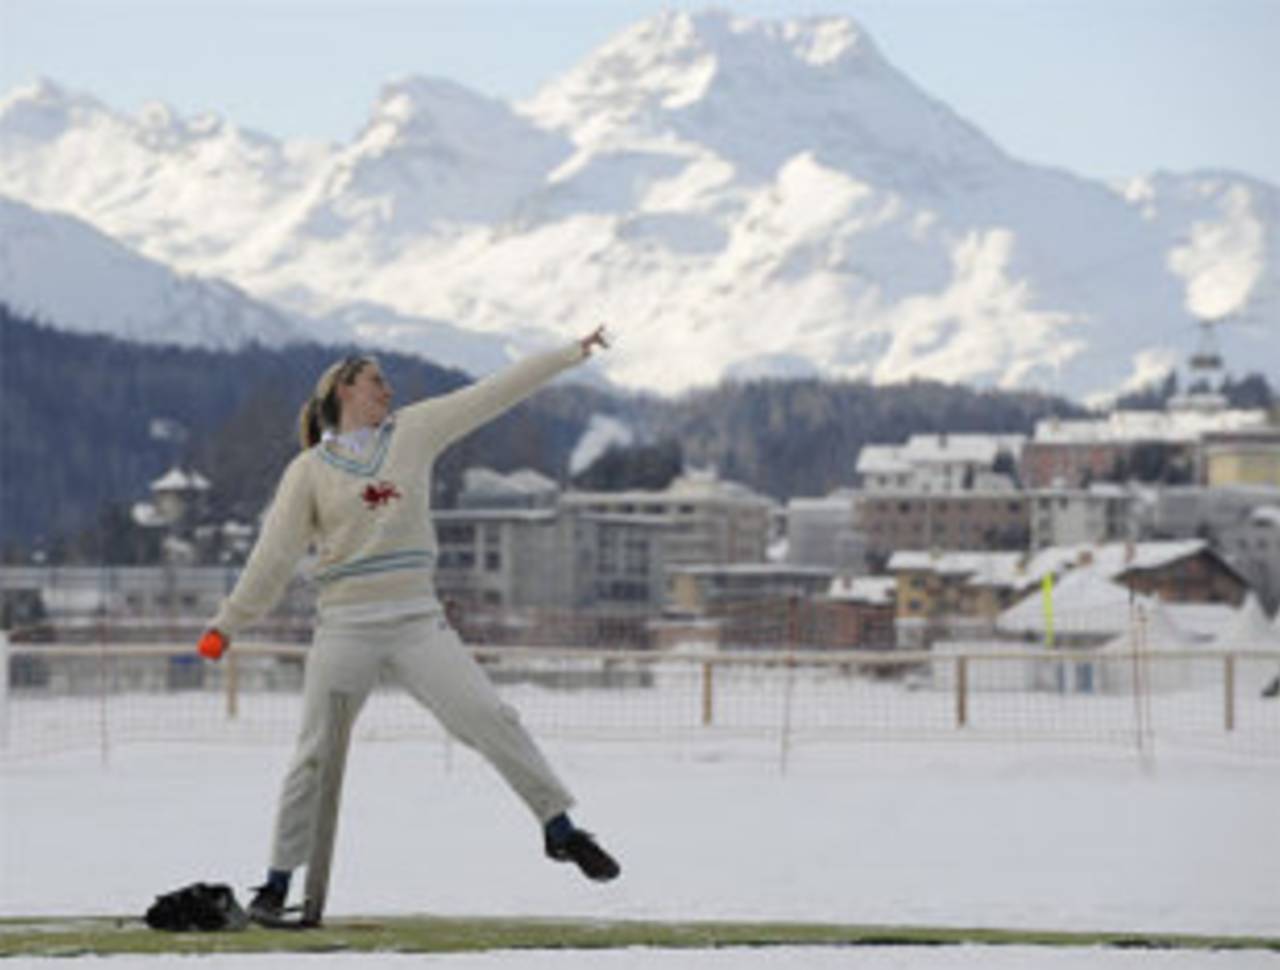 The Cricket on Ice tournament in St Moritz&nbsp;&nbsp;&bull;&nbsp;&nbsp;Getty Images